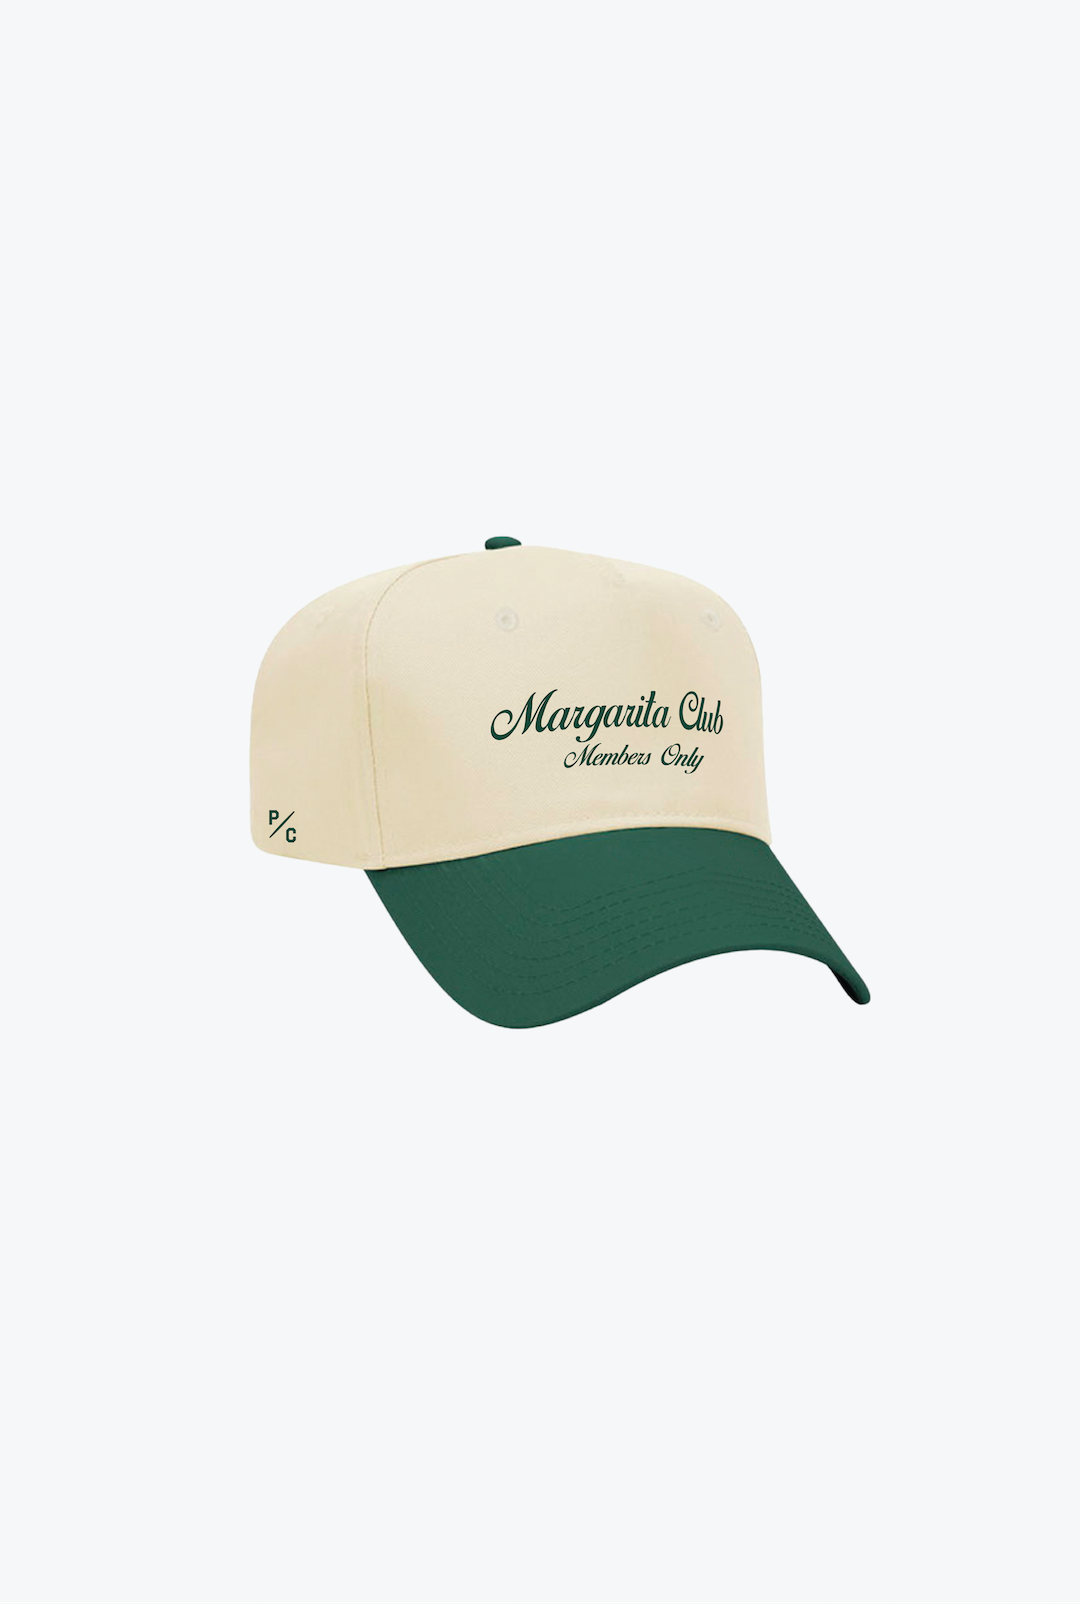 Margarita Club  A-Frame Cap - Forest Green/Ivory